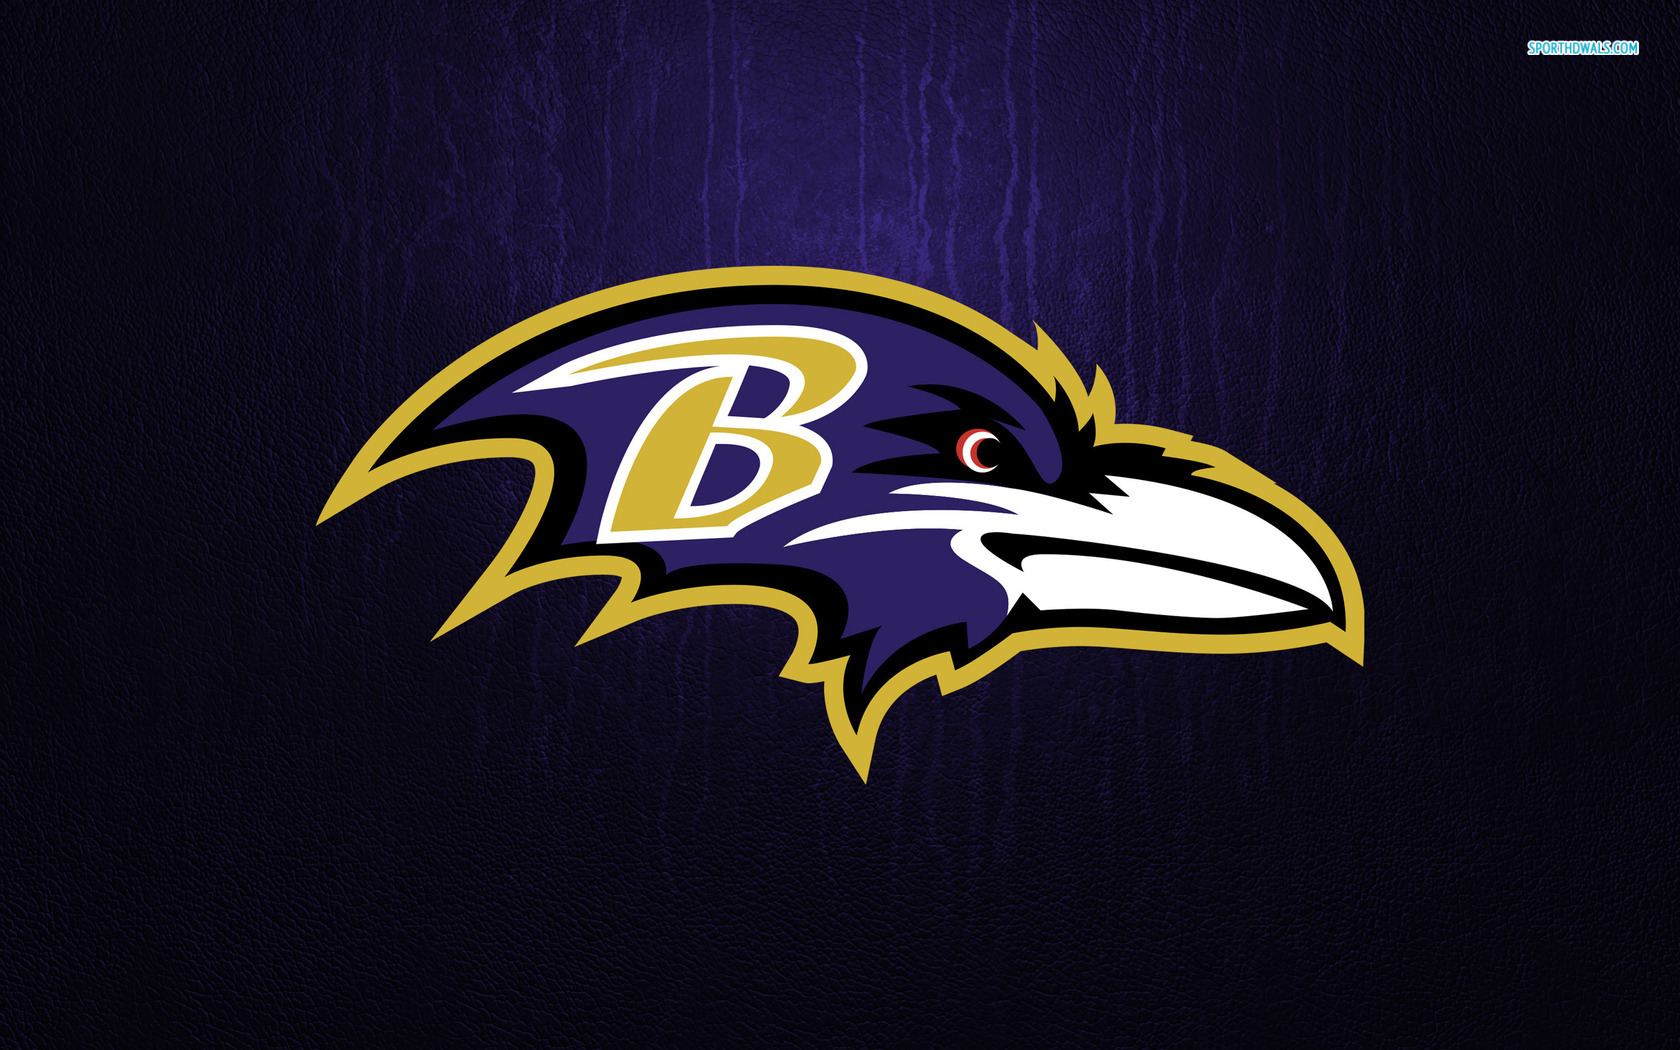 Baltimore Ravens wallpaper hd free download